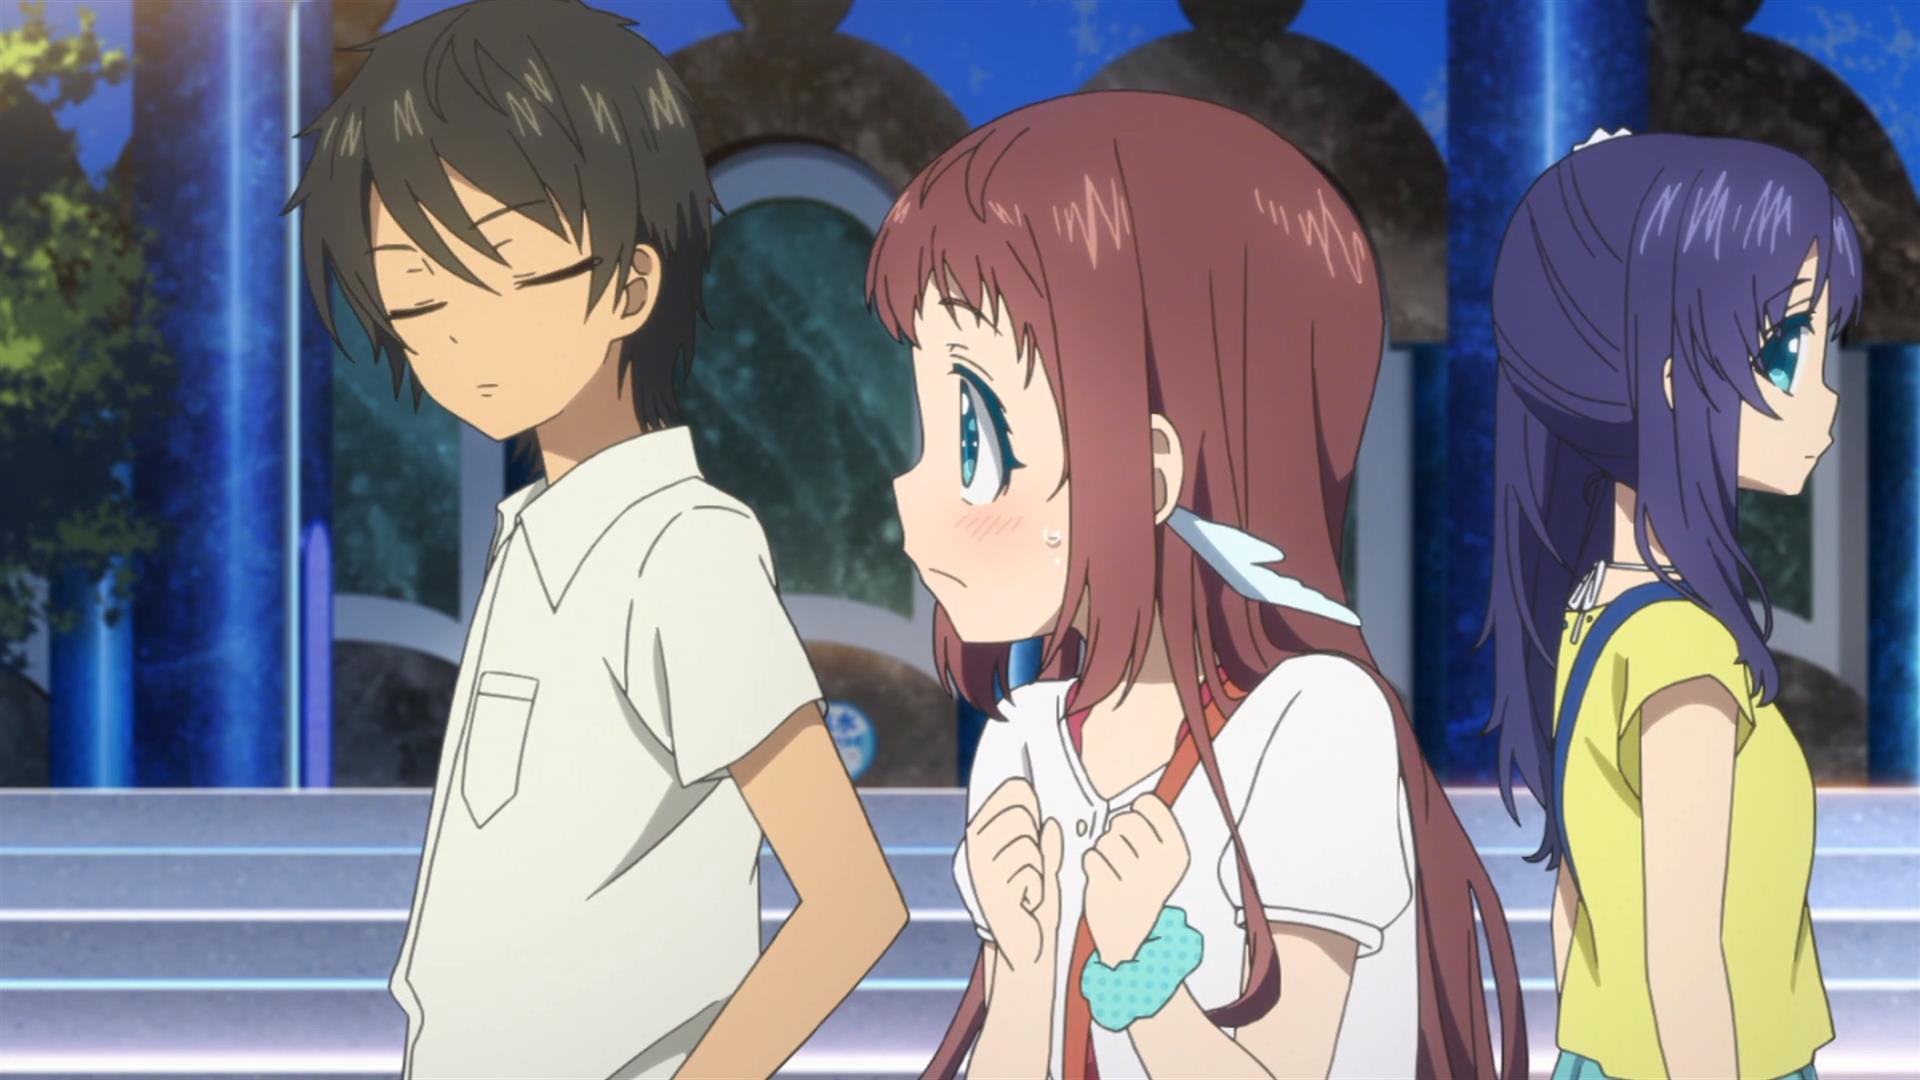 My Favorite Romance Anime: Why Nagi No Asukara? 